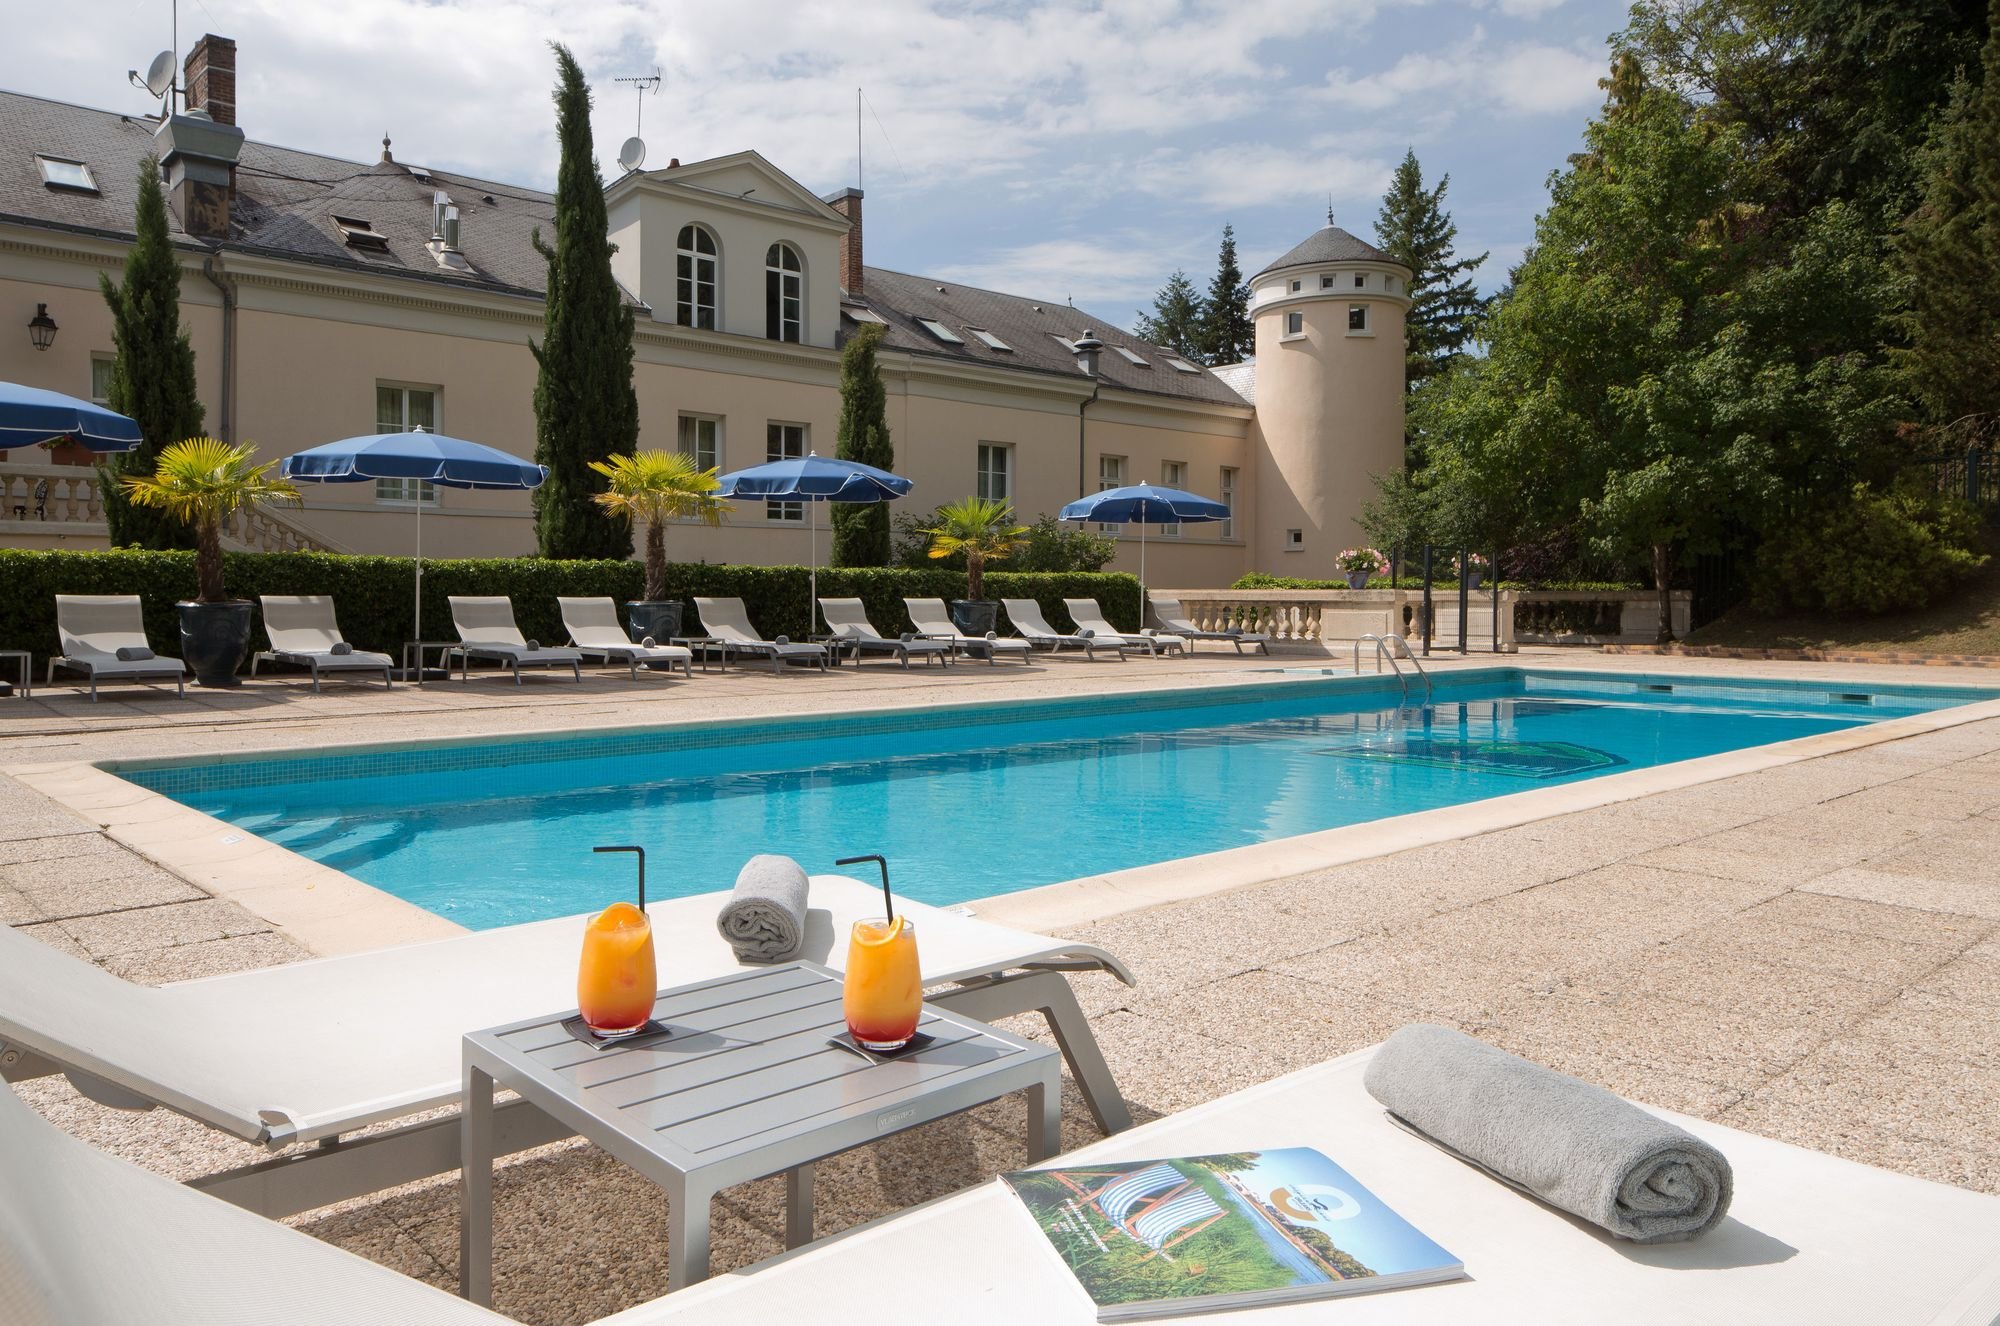 Domaine de Vaugouard | Castle with swimming pool near Paris